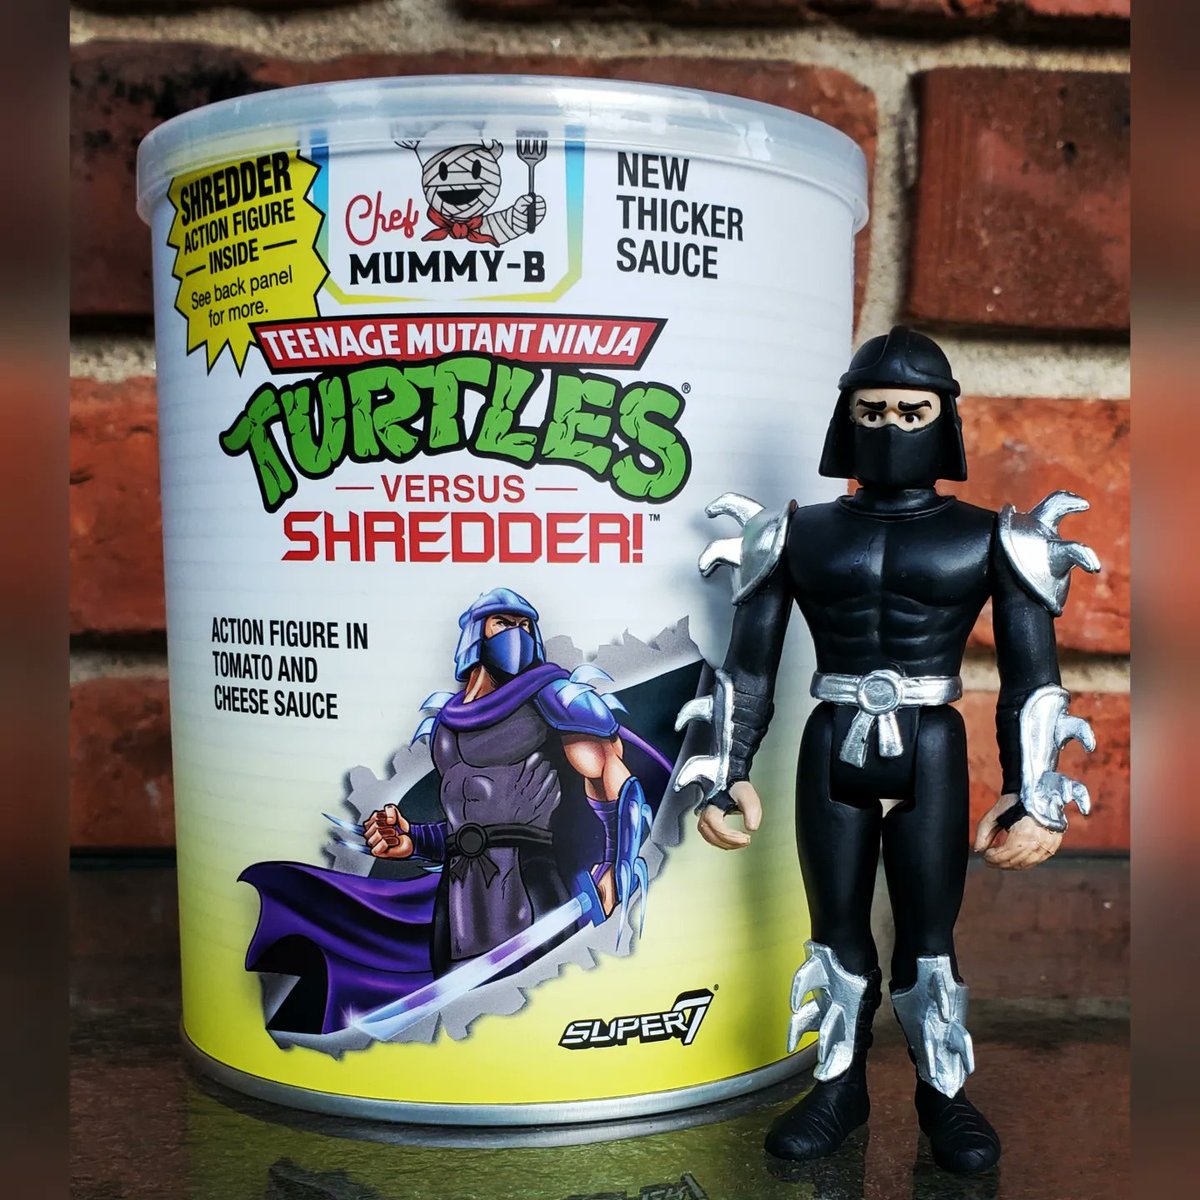 Shreddios
#super7 #reaction #teenagemutantninjaturtles #tmnt #shredder #chefboyardee #spaghettios #sandiegocomiccon #sdcc #bizzaro13